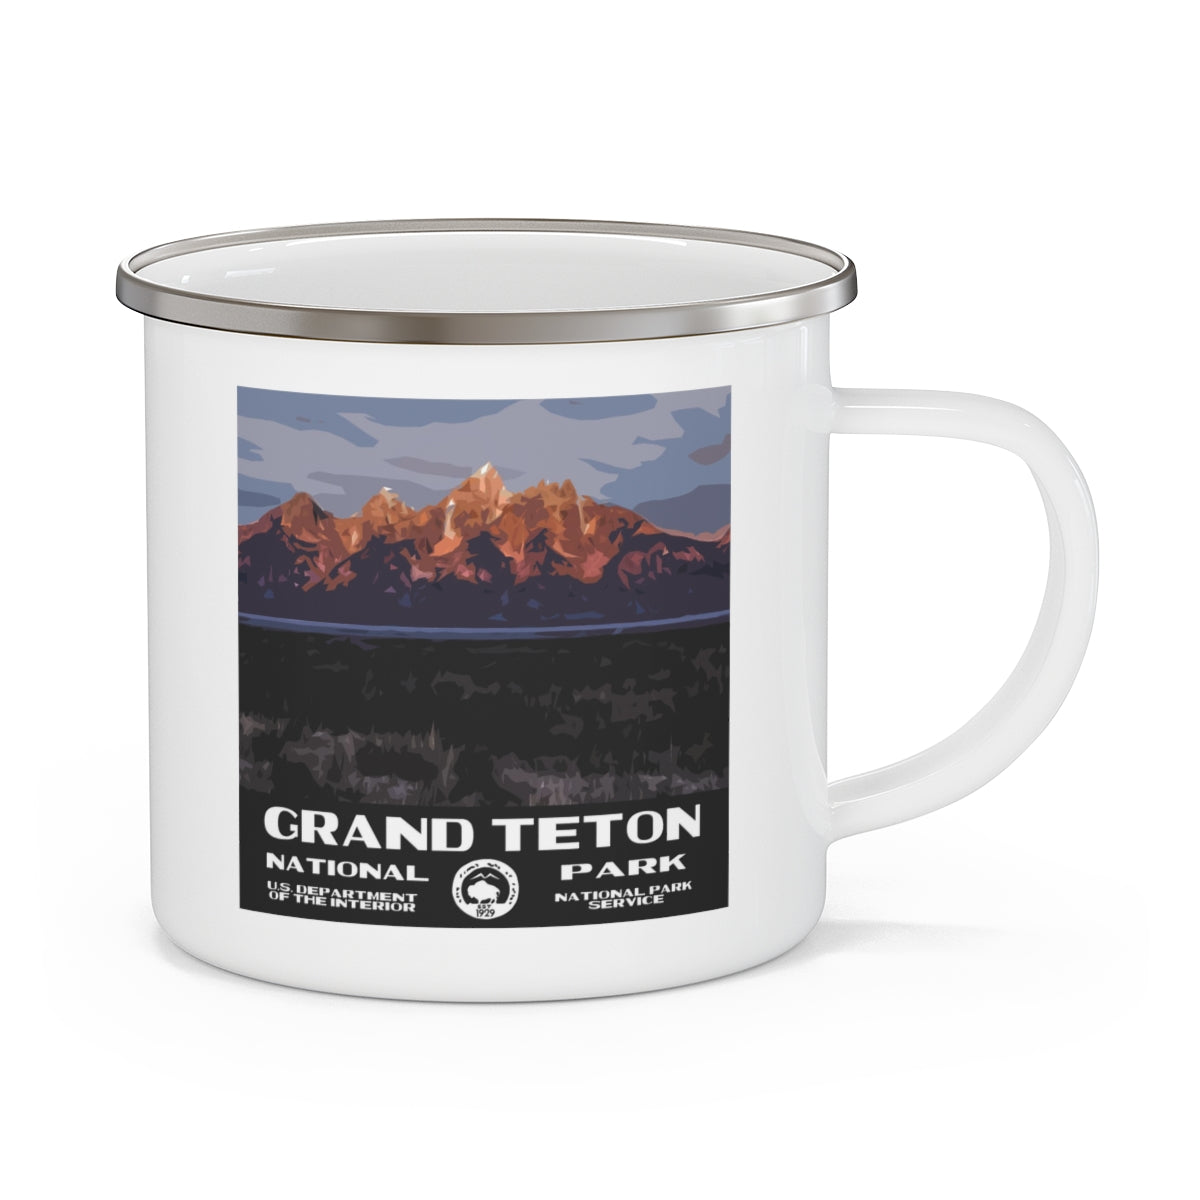 Grand Teton National Park Enamel Camping Mug